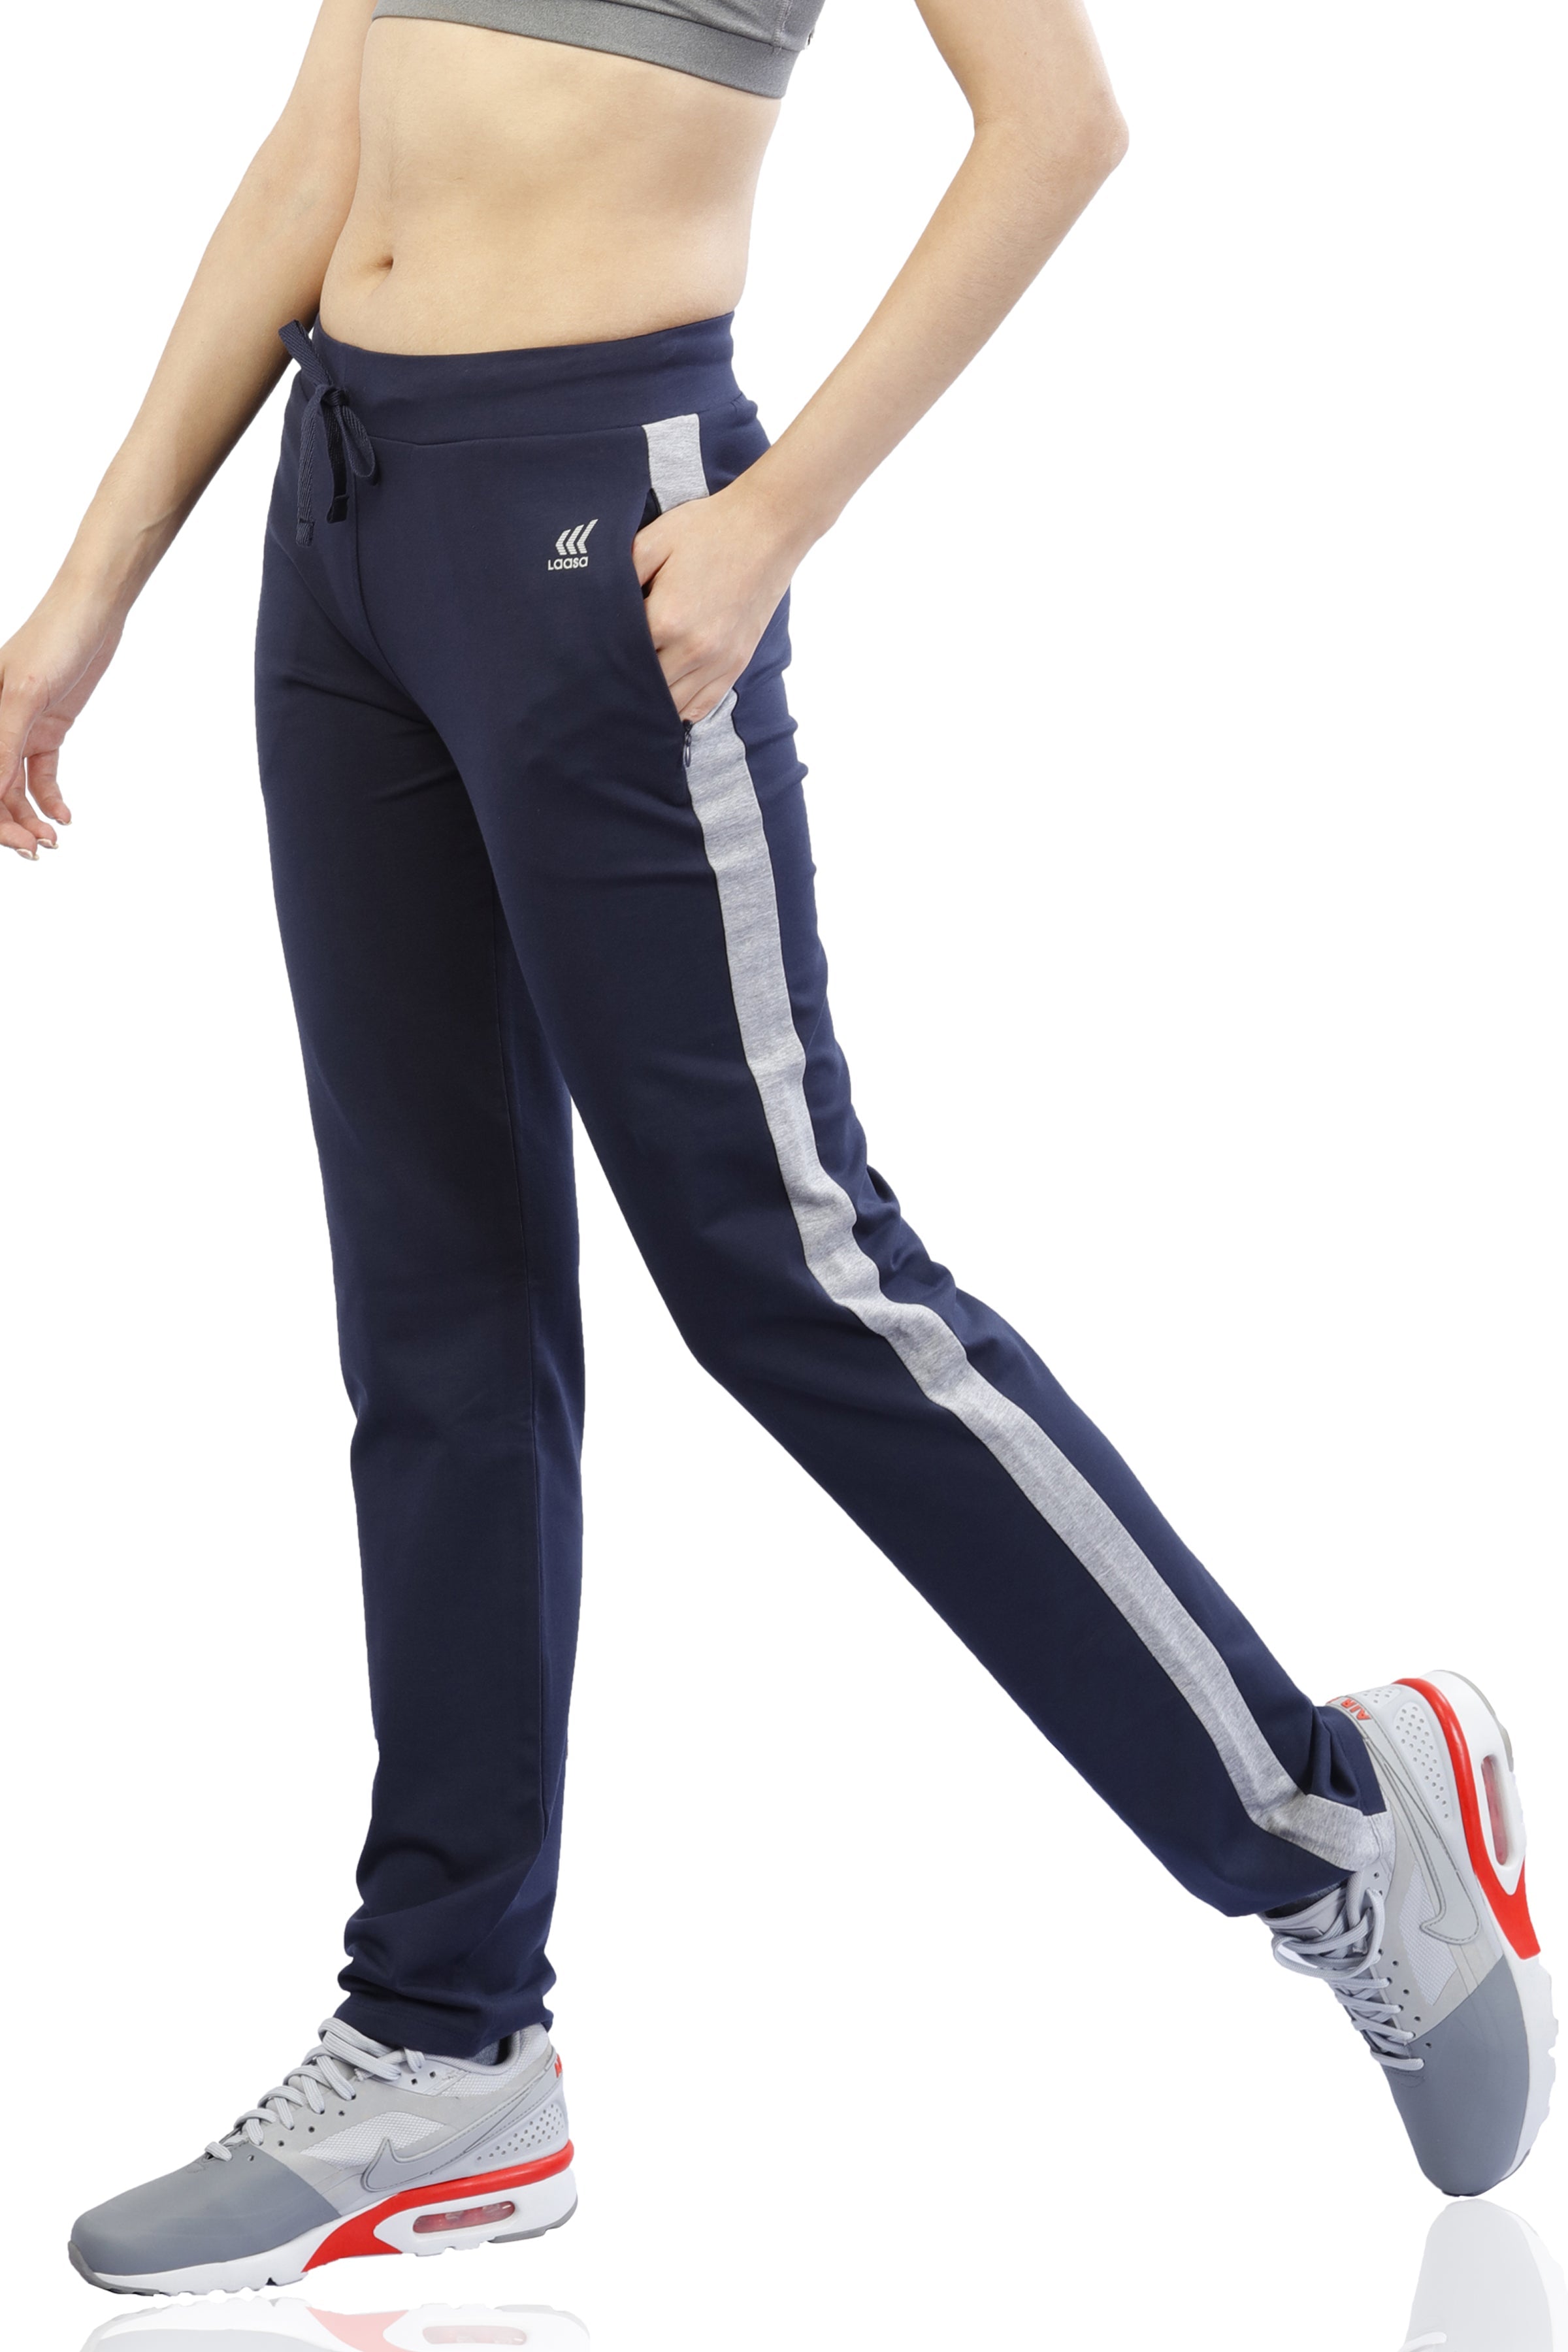 Buy Okane Blue Regular Fit Track Pants for Women's Online @ Tata CLiQ